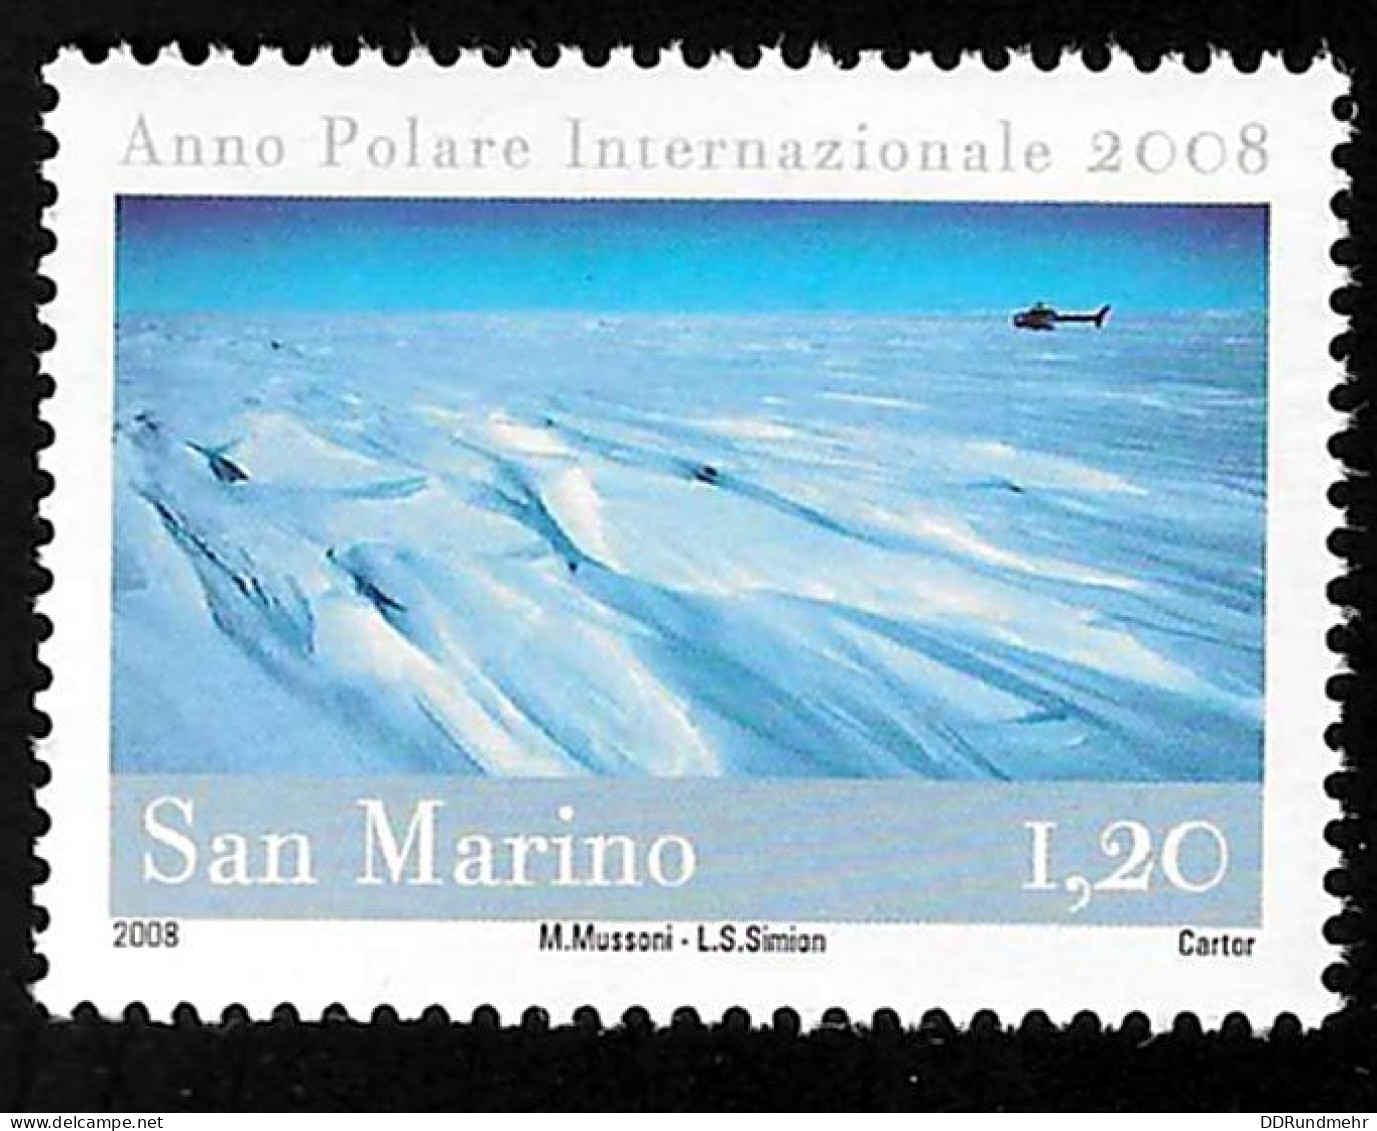 2008 Polar Year  Michel SM 2360 Stamp Number SM 1770 Yvert Et Tellier SM 2153 Stanley Gibbons SM 2186 Xx MNH - Ongebruikt